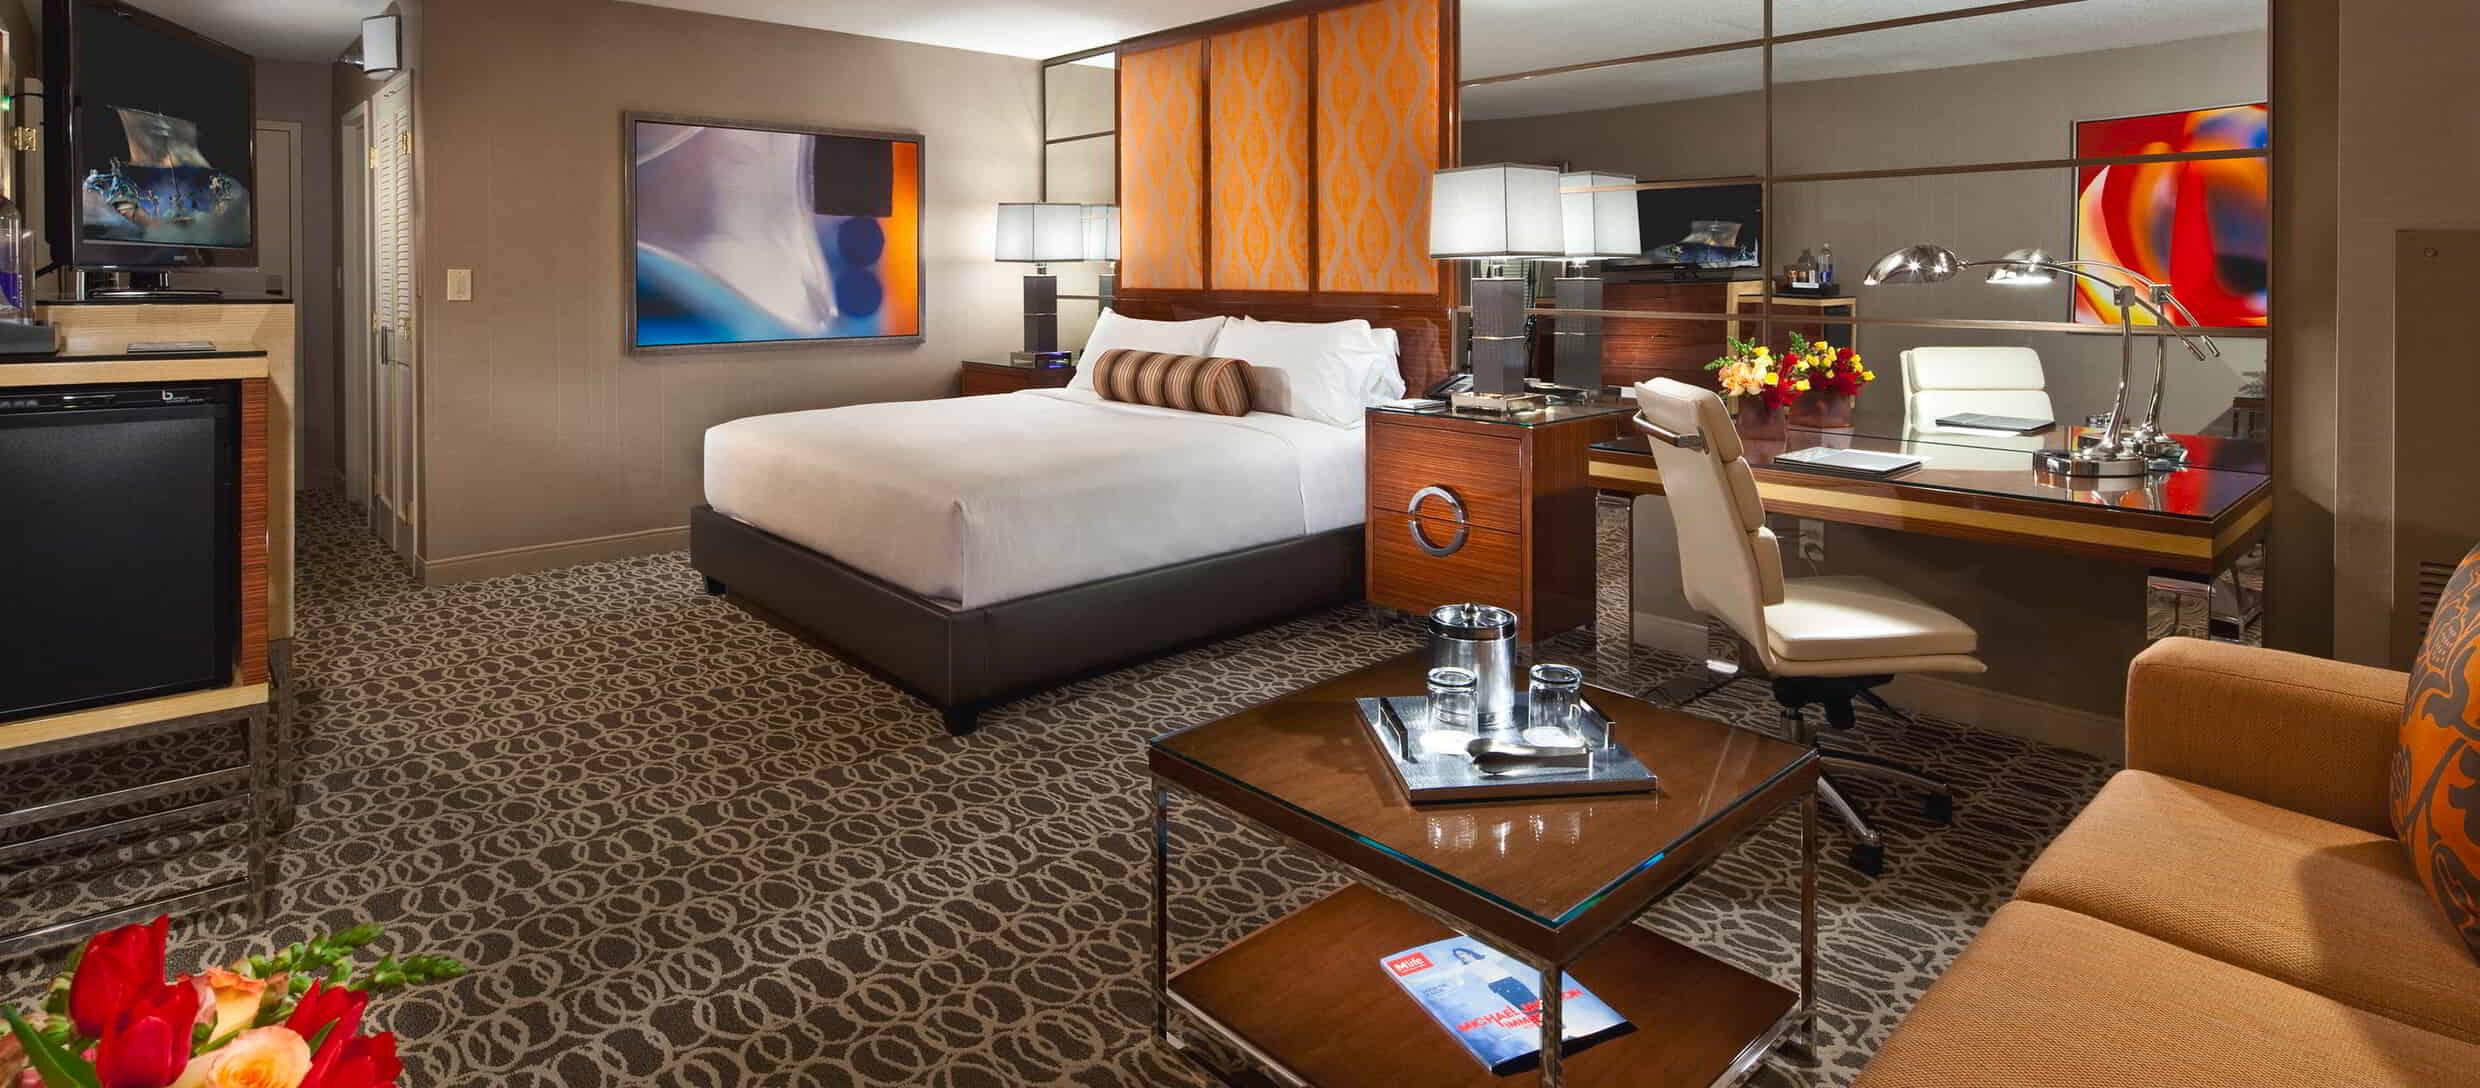 MGM Grand Las Vegas bedroom